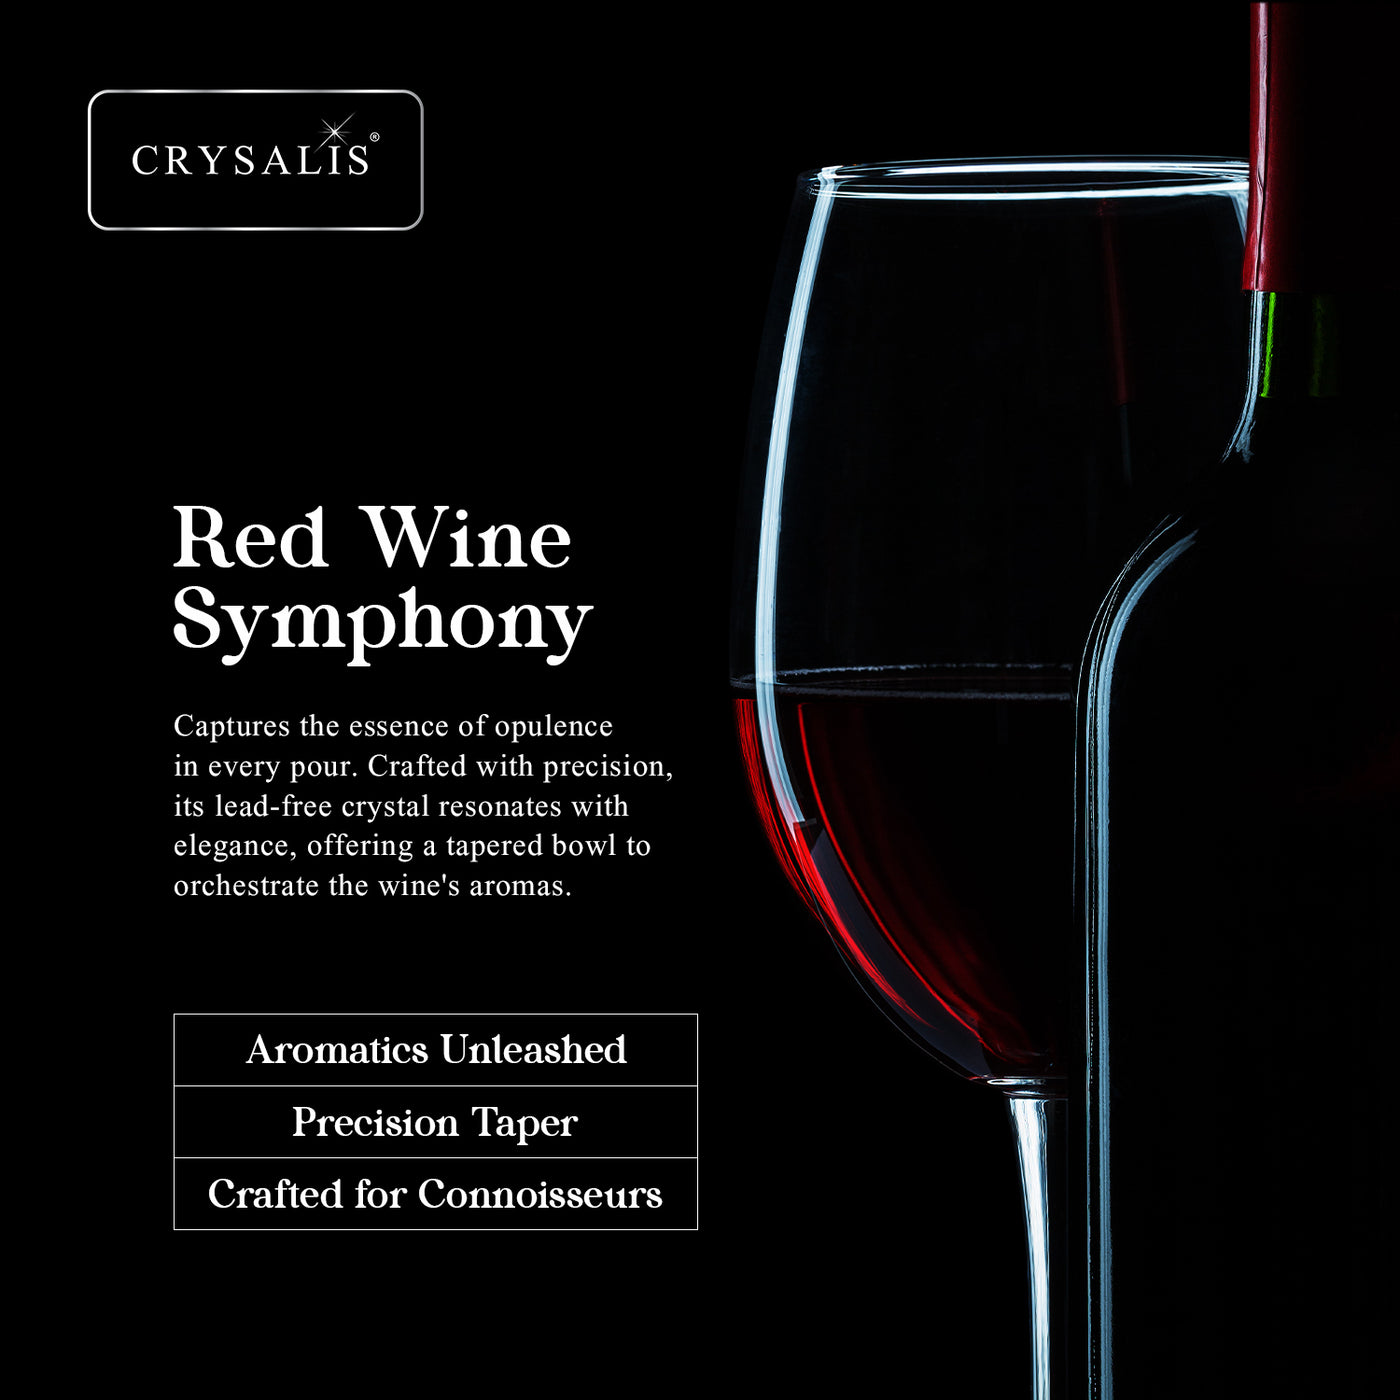 CRYSALIS Premium Crystal Stemware Red Wine Glass [Set of 2] Cocktail Glass 250ml